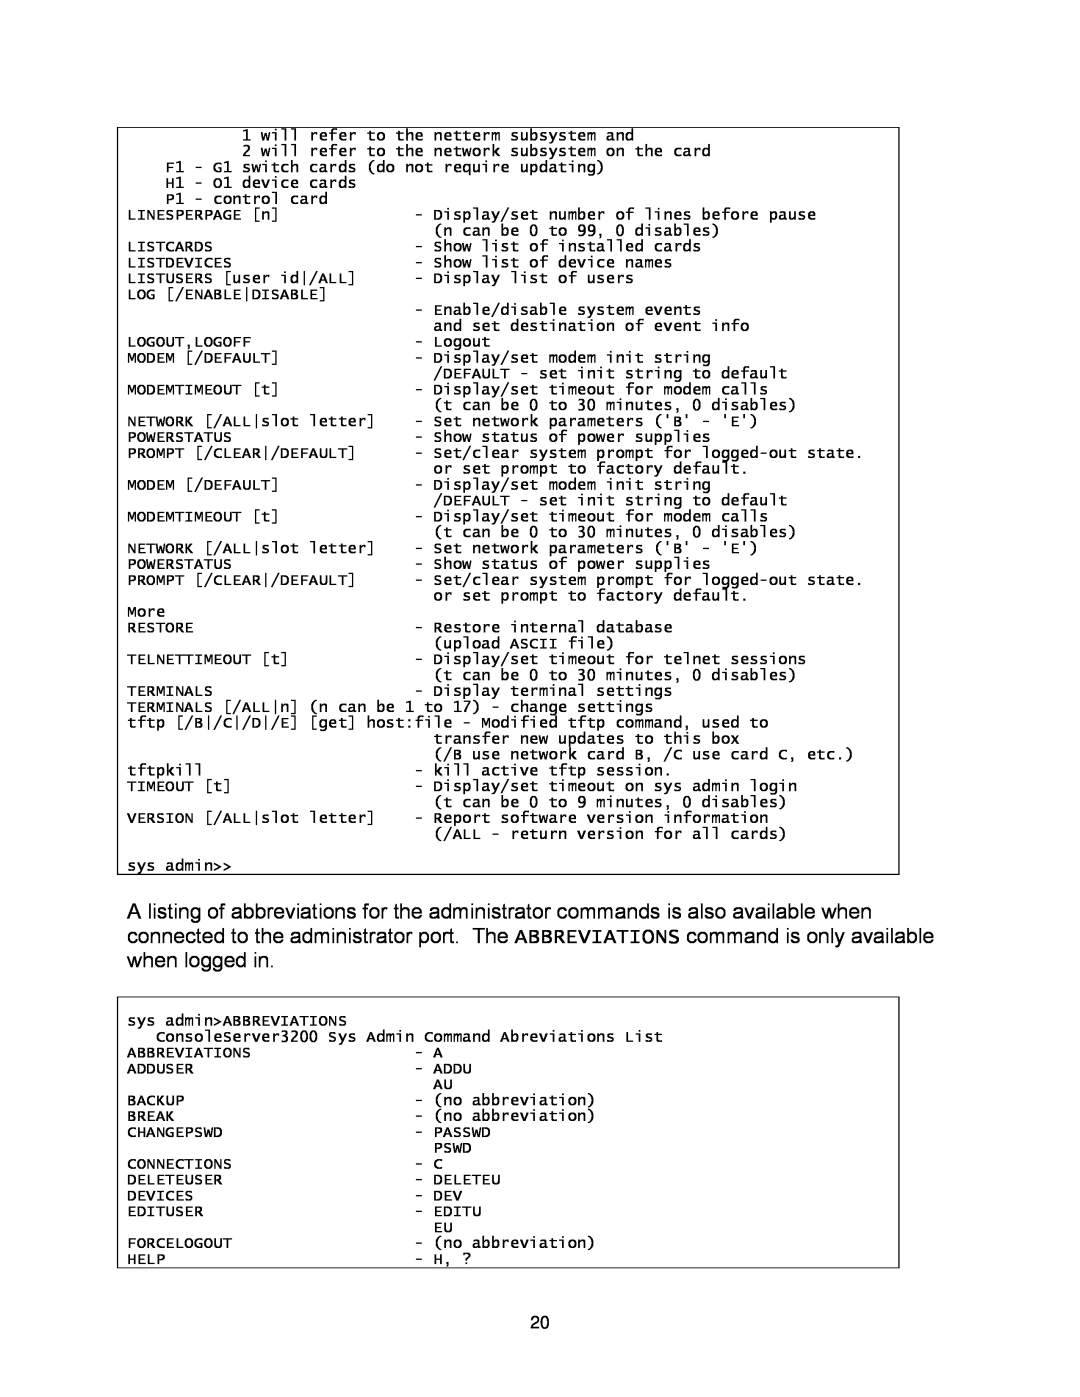 Lightwave Communications 3200 user manual 